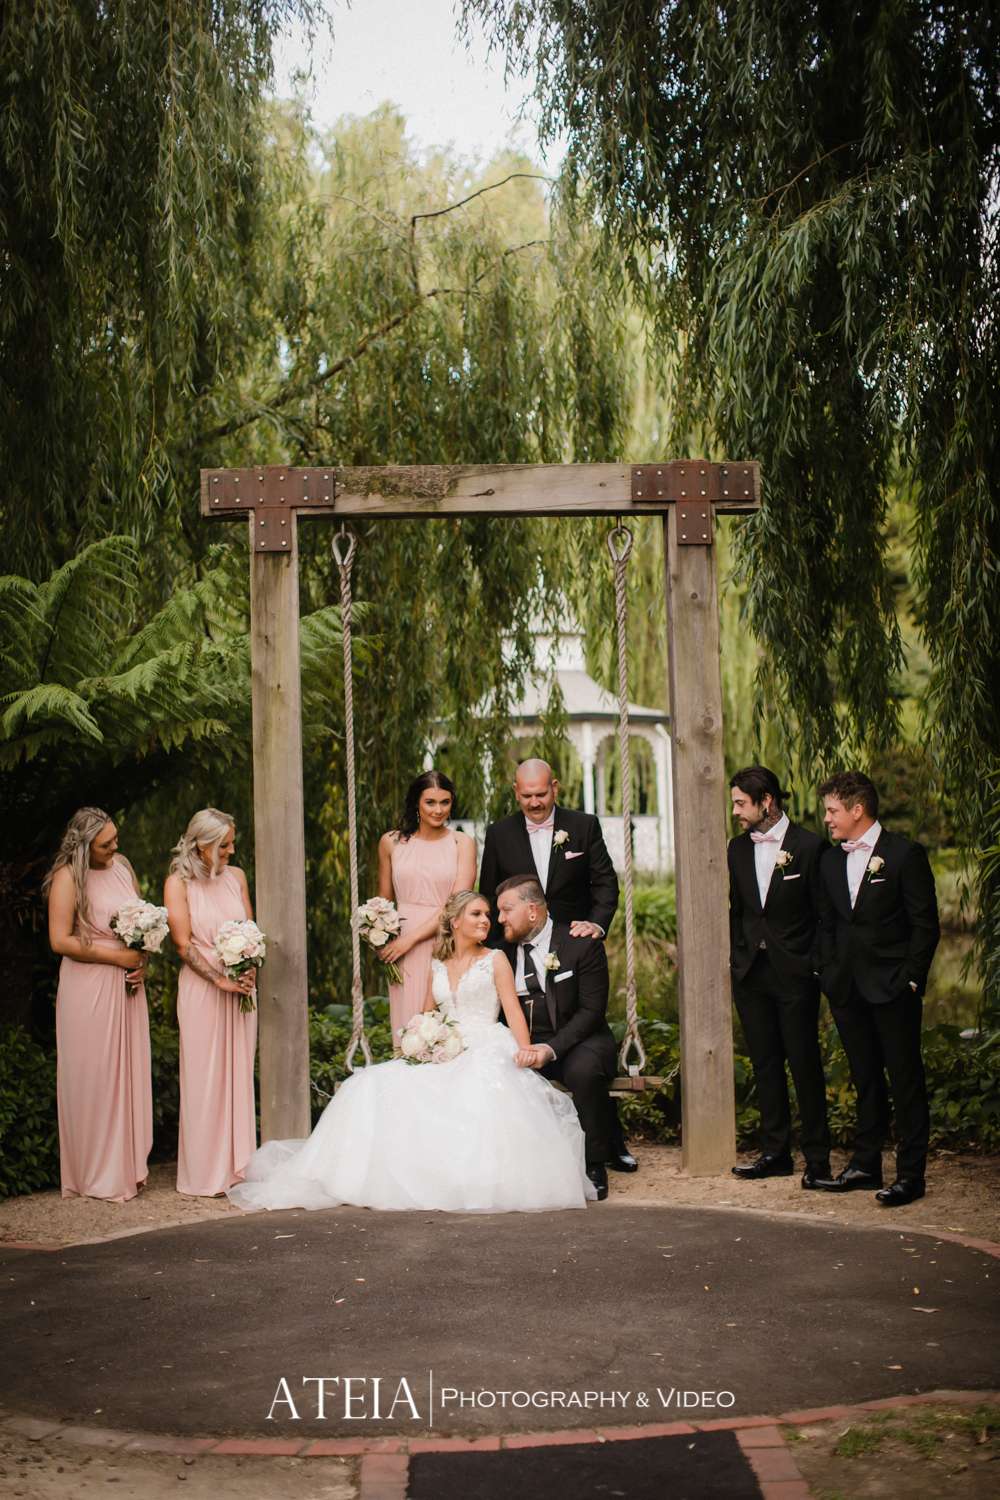 Ballara Receptions - Kellie & Jaxson's Garden Summer Wedding Ceremony - ATEIA Photography & Video